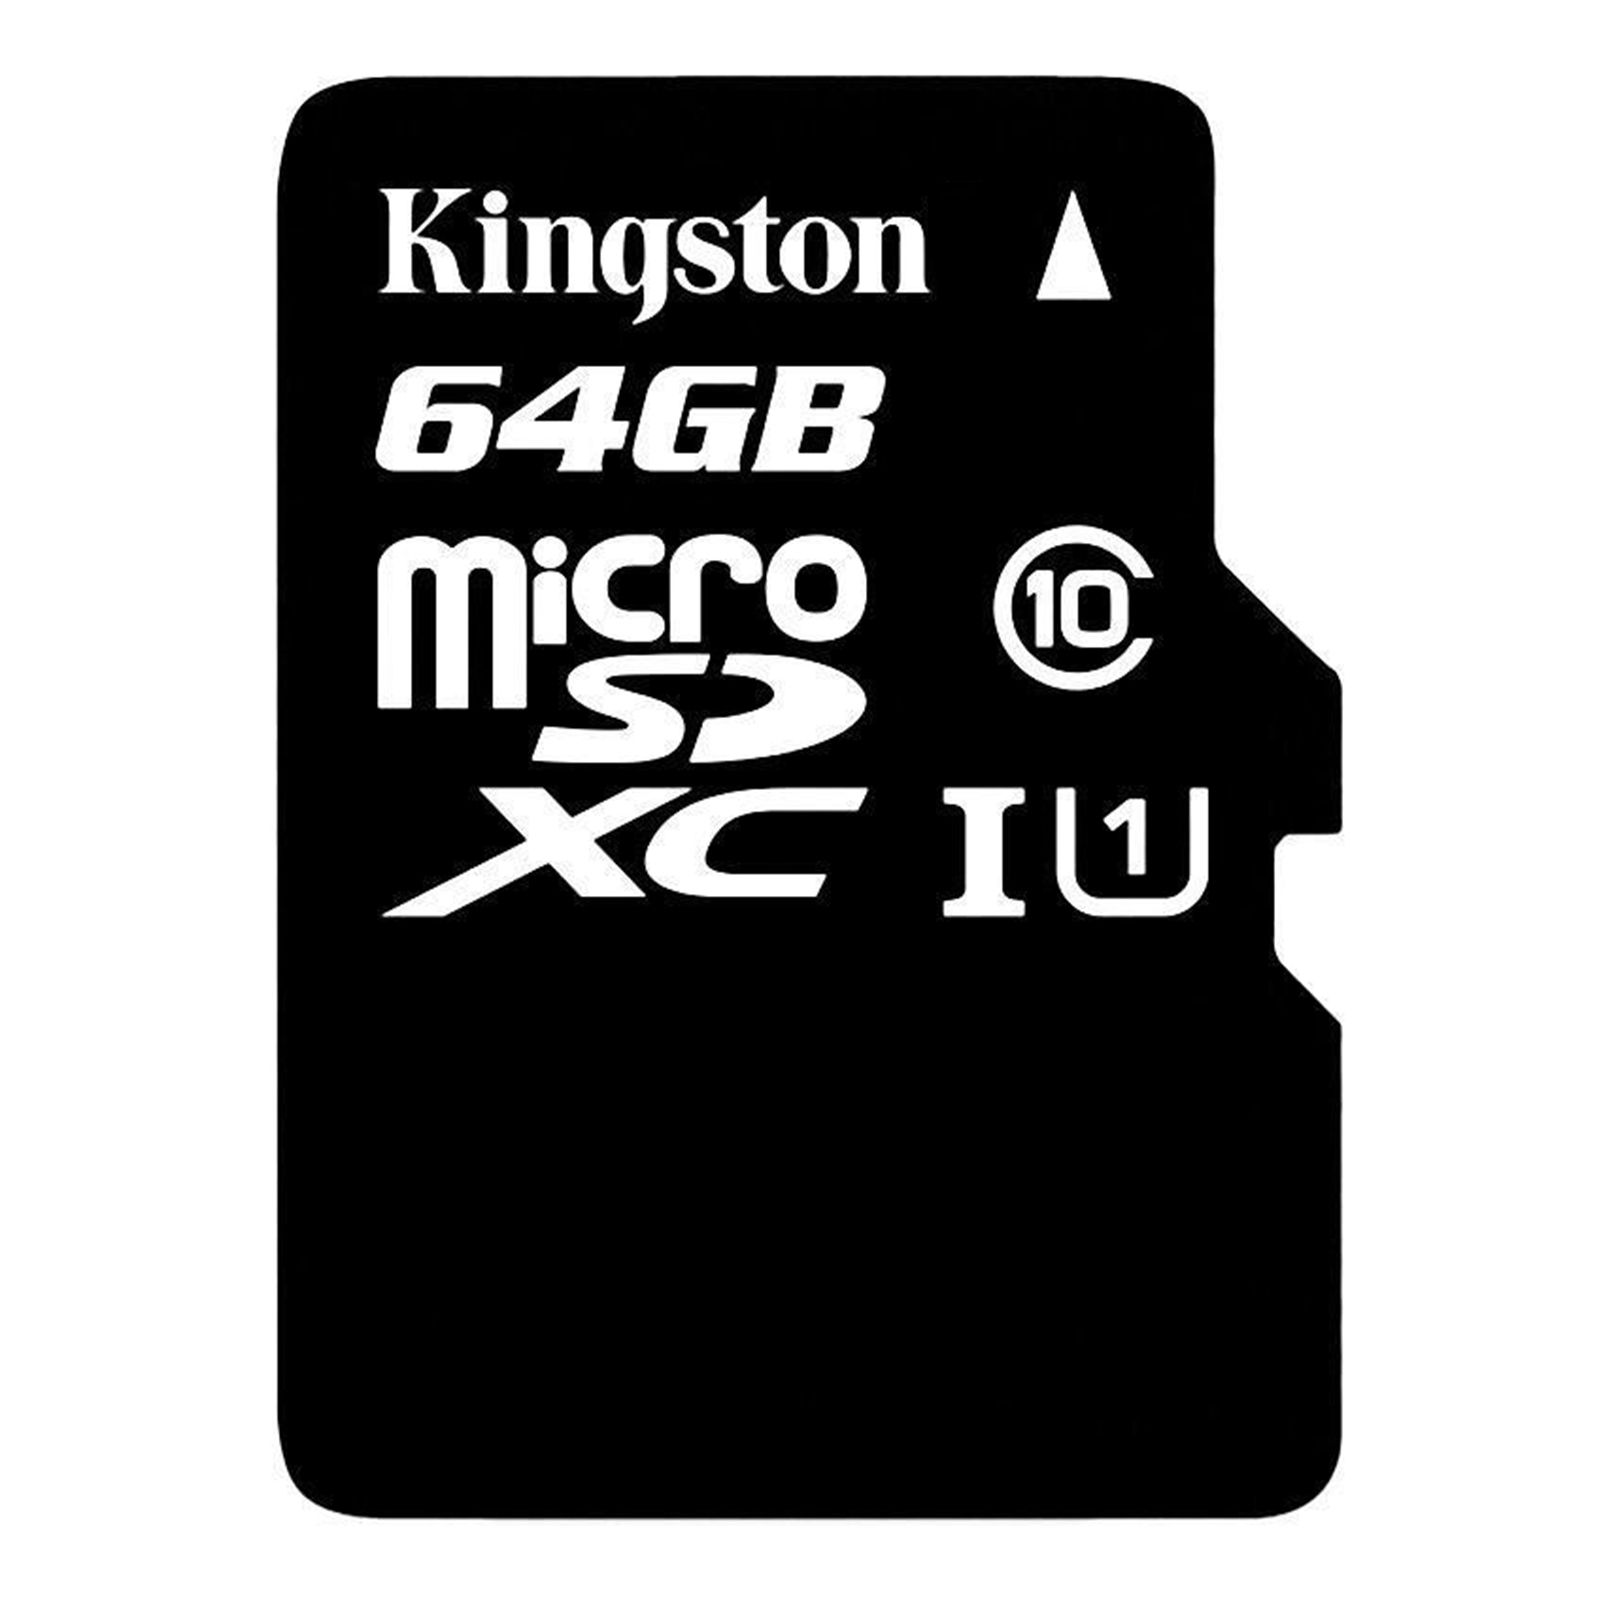 Карты памяти Kingston Micro 64gb. MICROSD Kingston 64gb. Кингстон микро СД 64 ГБ. Kingston SD карта 64 ГБ.